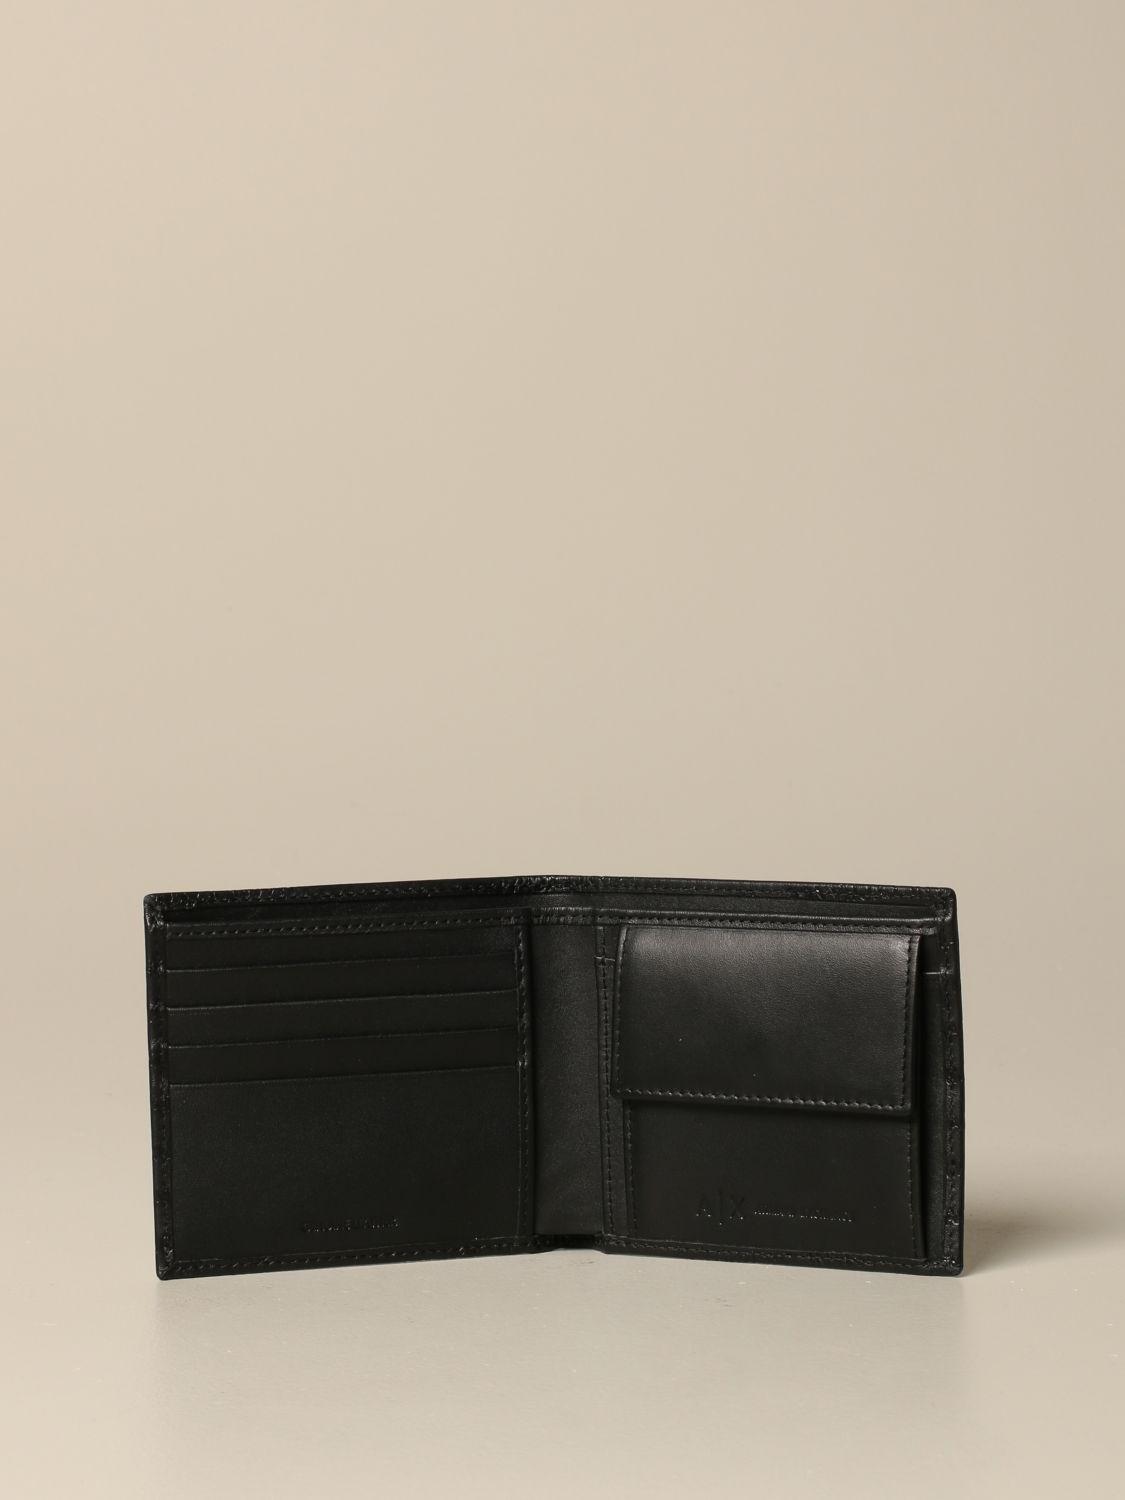 Armani Exchange Leather Wallet in Black for Men - Lyst